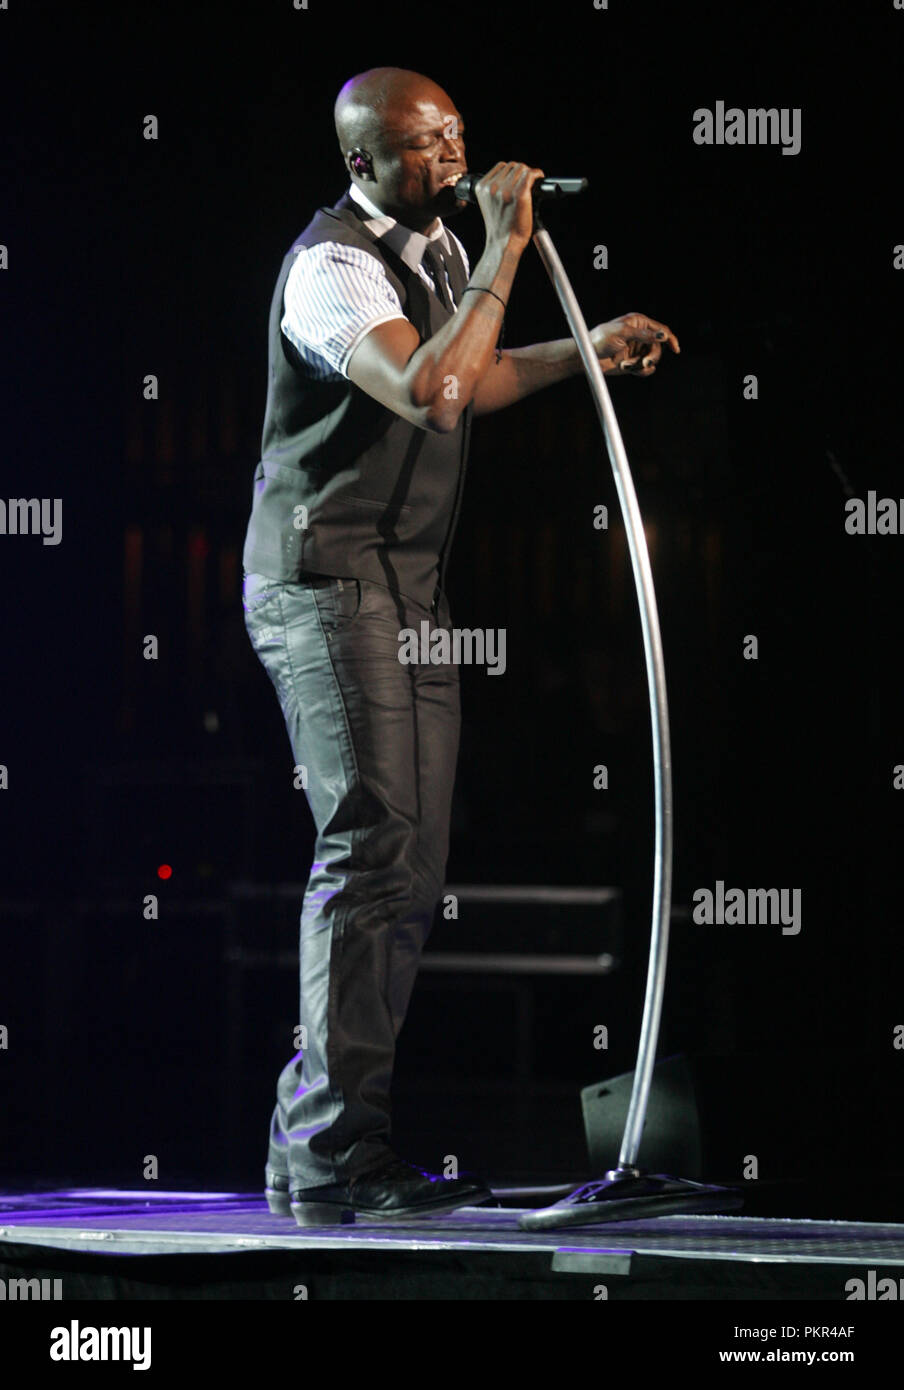 Seal performs in concert at the Fillmore Miami Beach in Miami Beach, Florida on April 22, 2009. Stock Photo